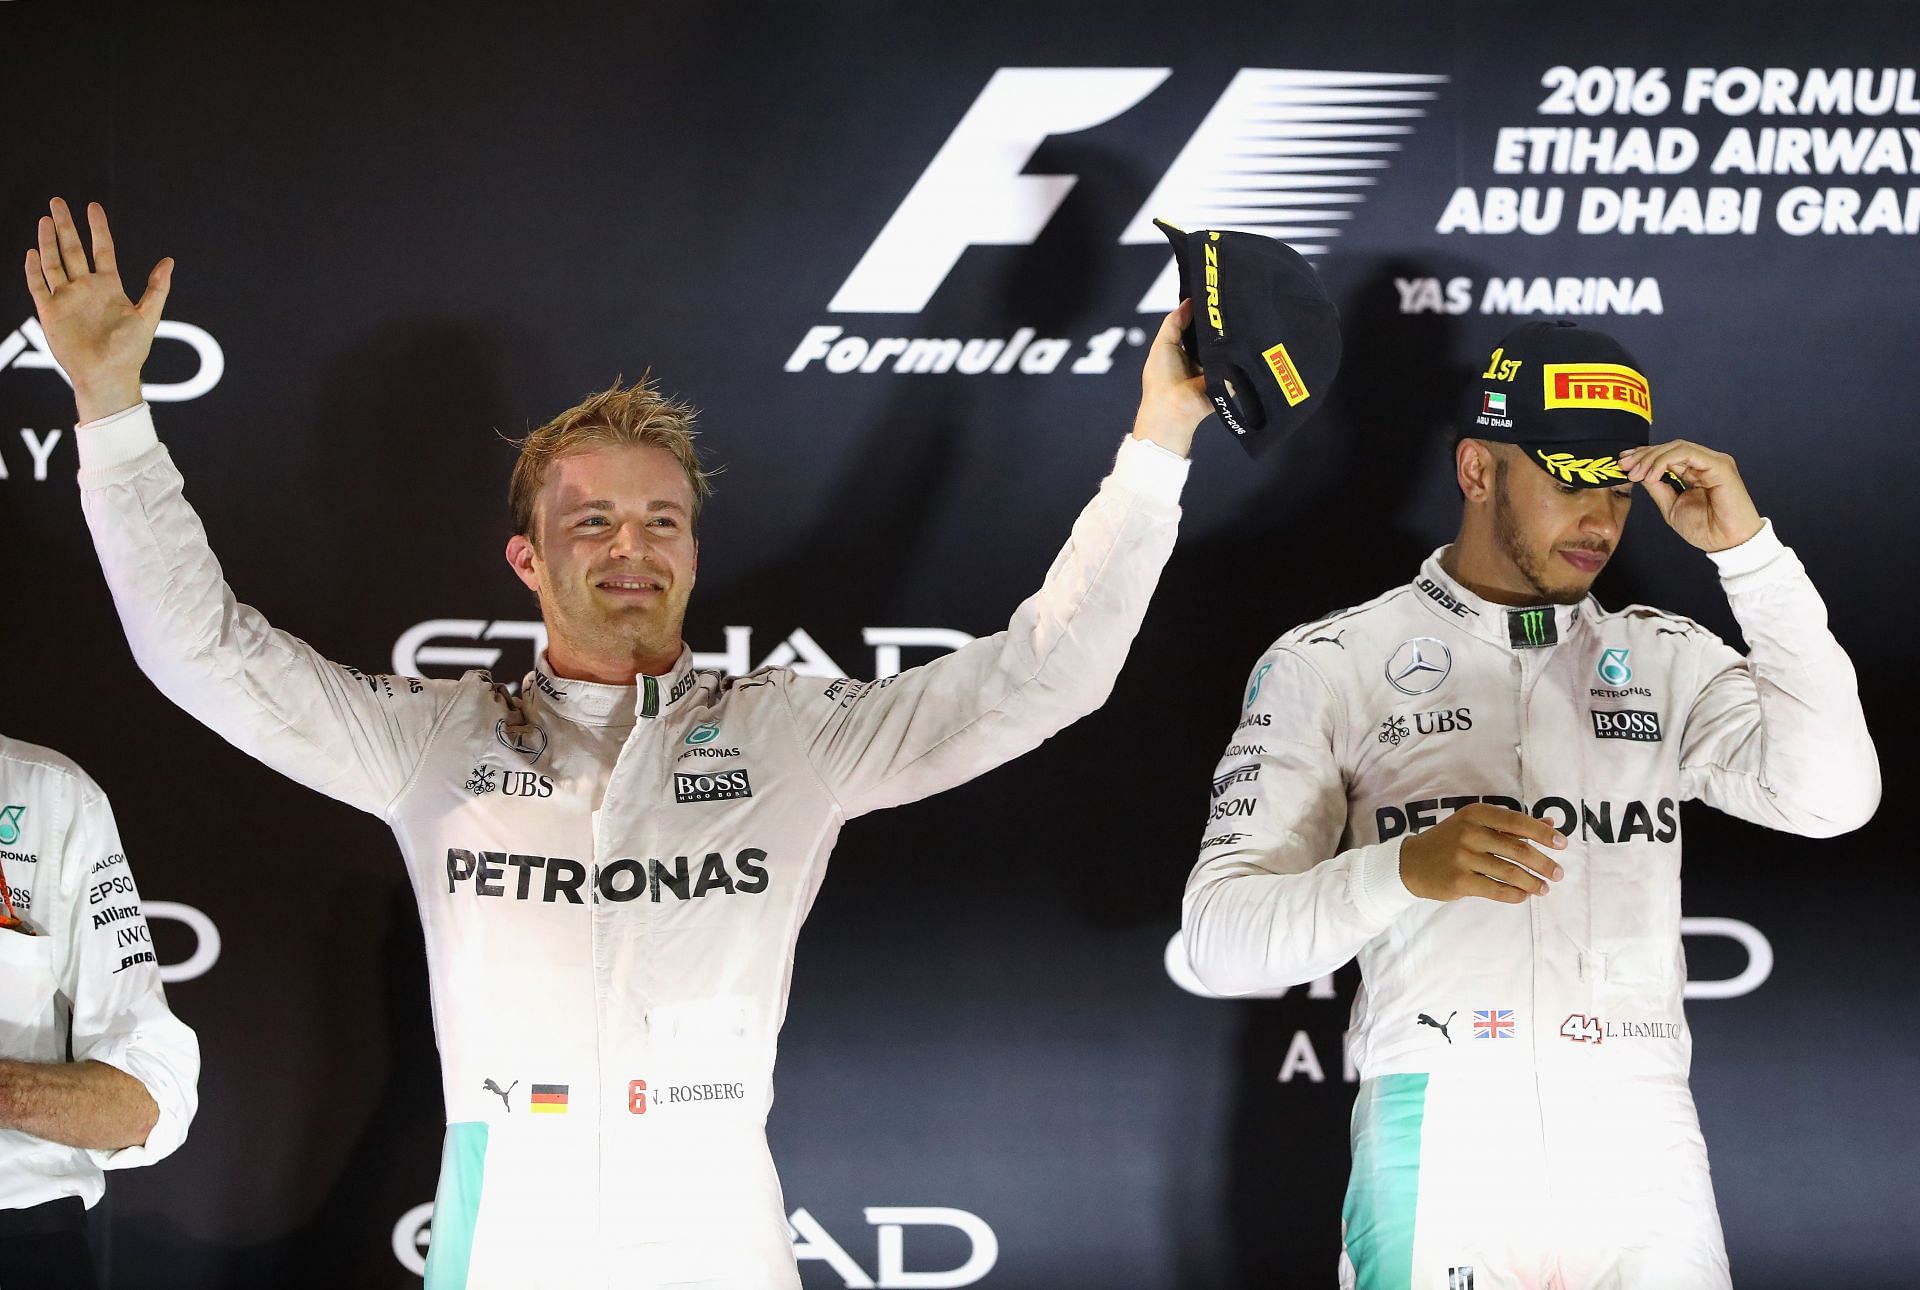 F1 Grand Prix of Abu Dhabi 2016 (Photo courtesy Getty Images)